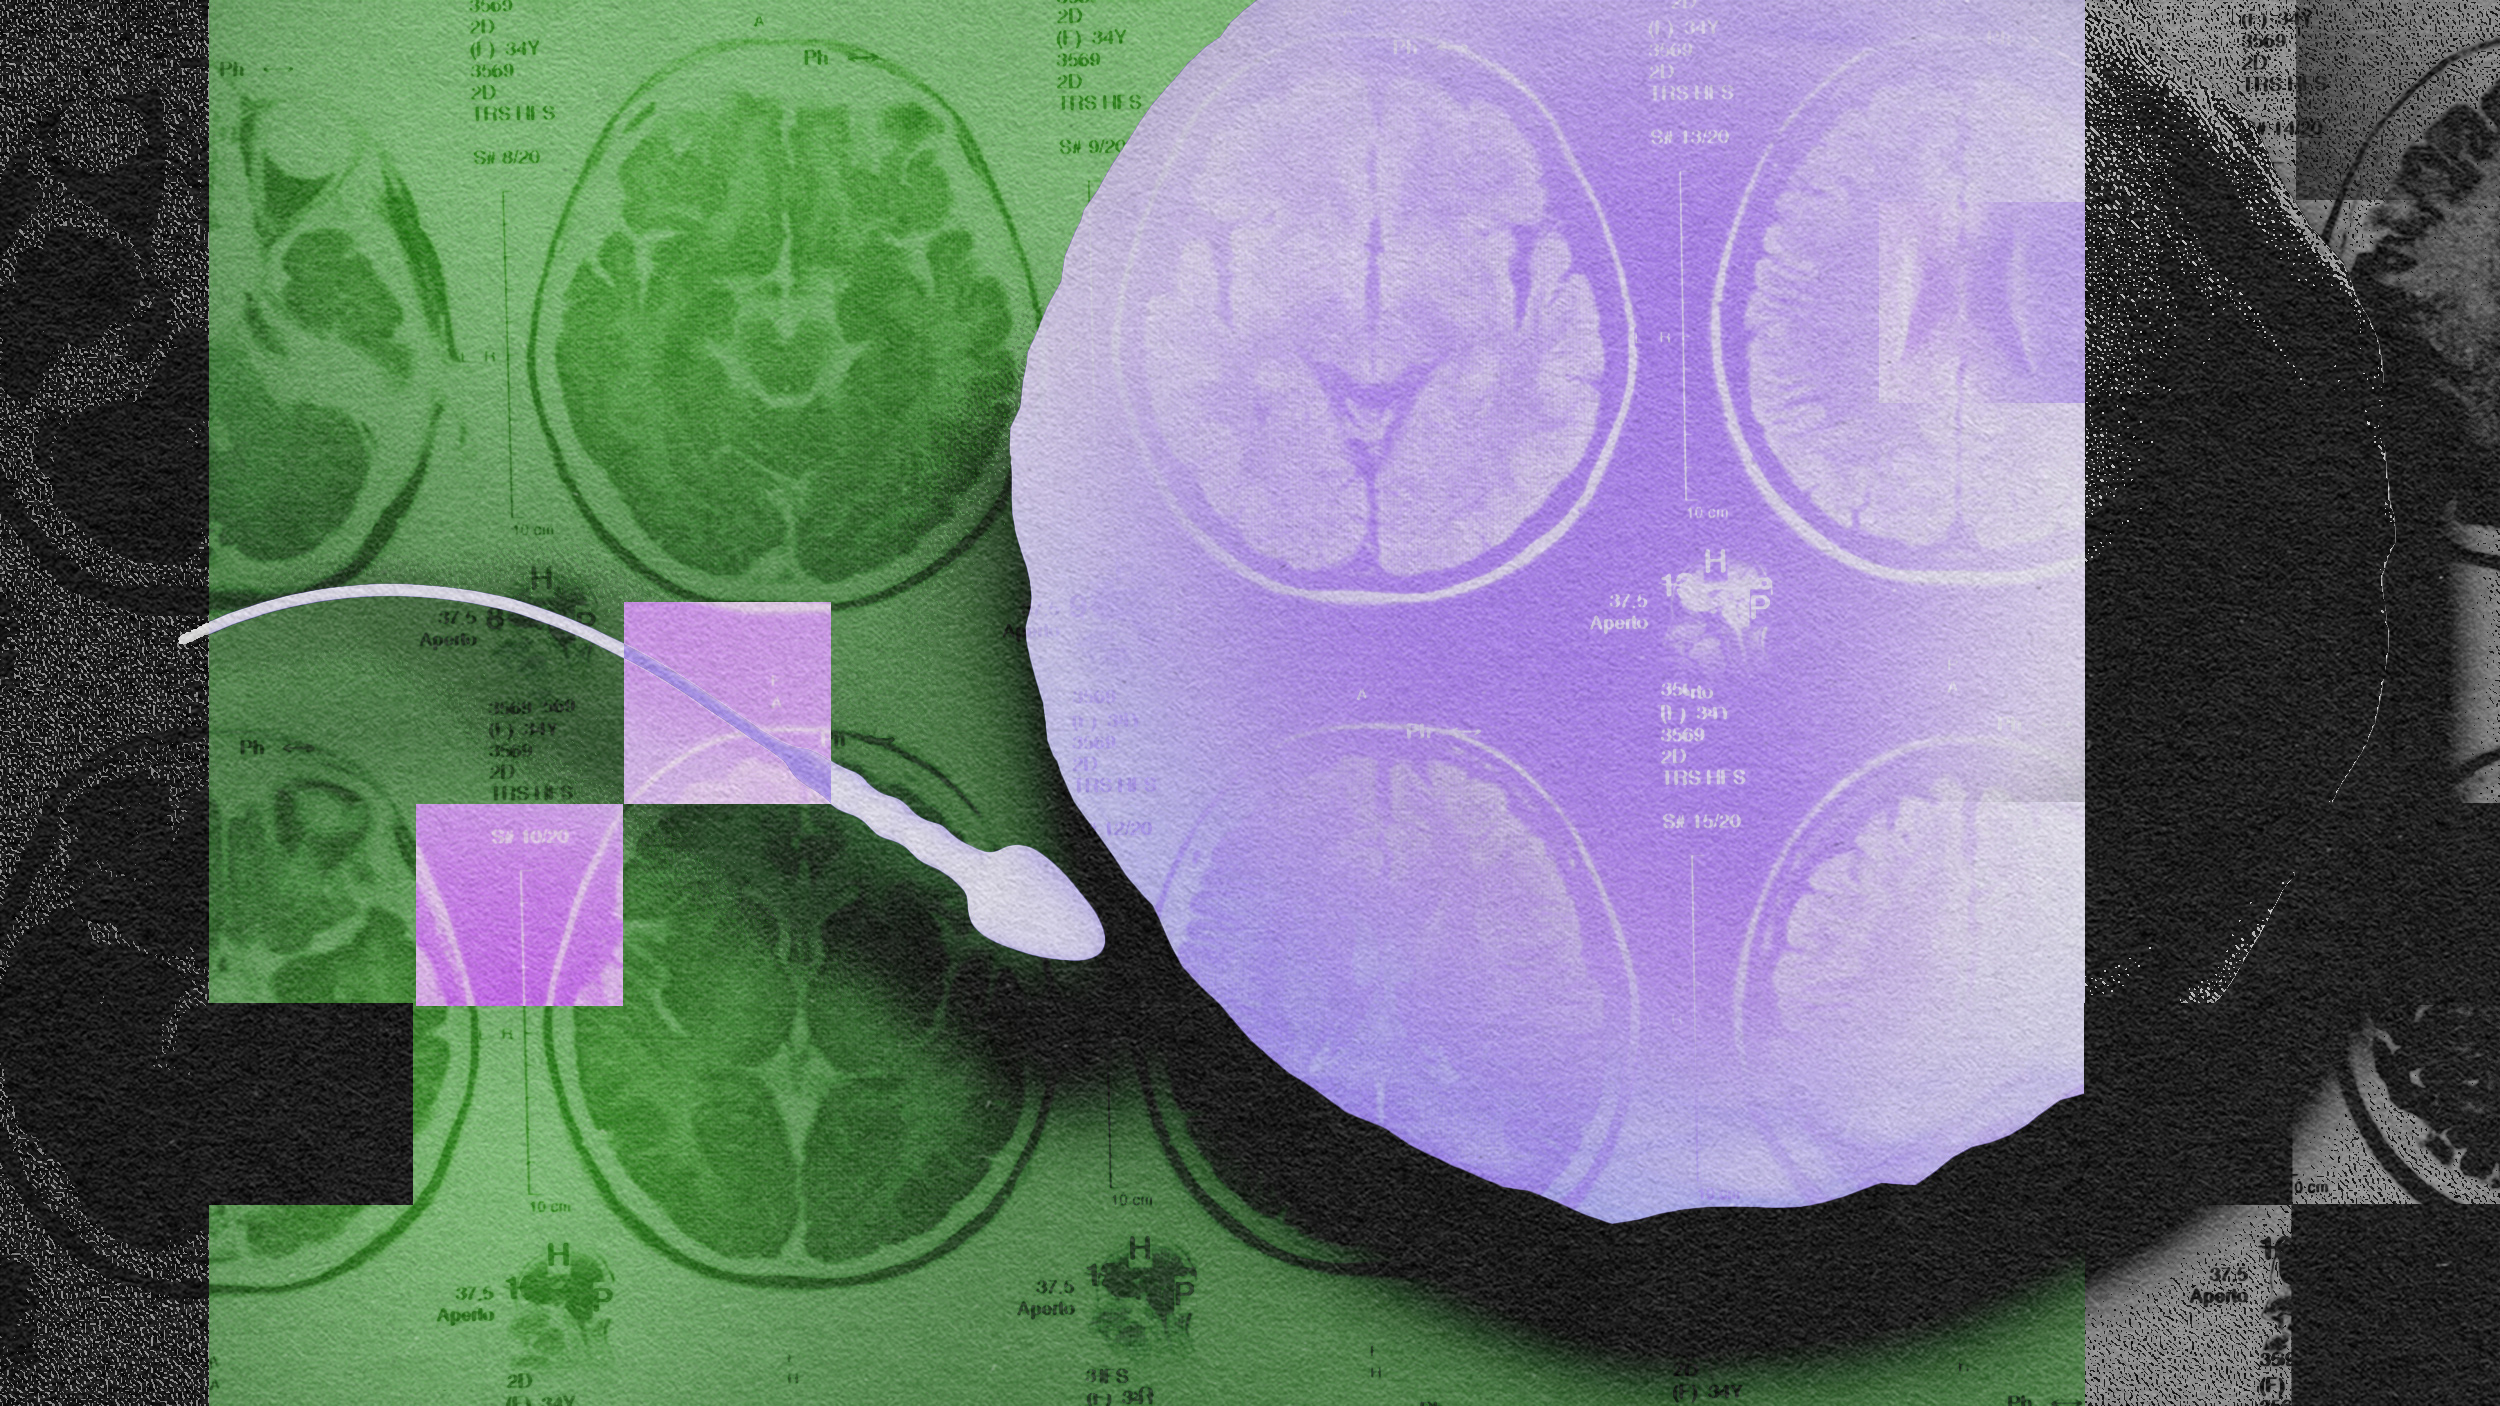 An image of an mri showing a brain.